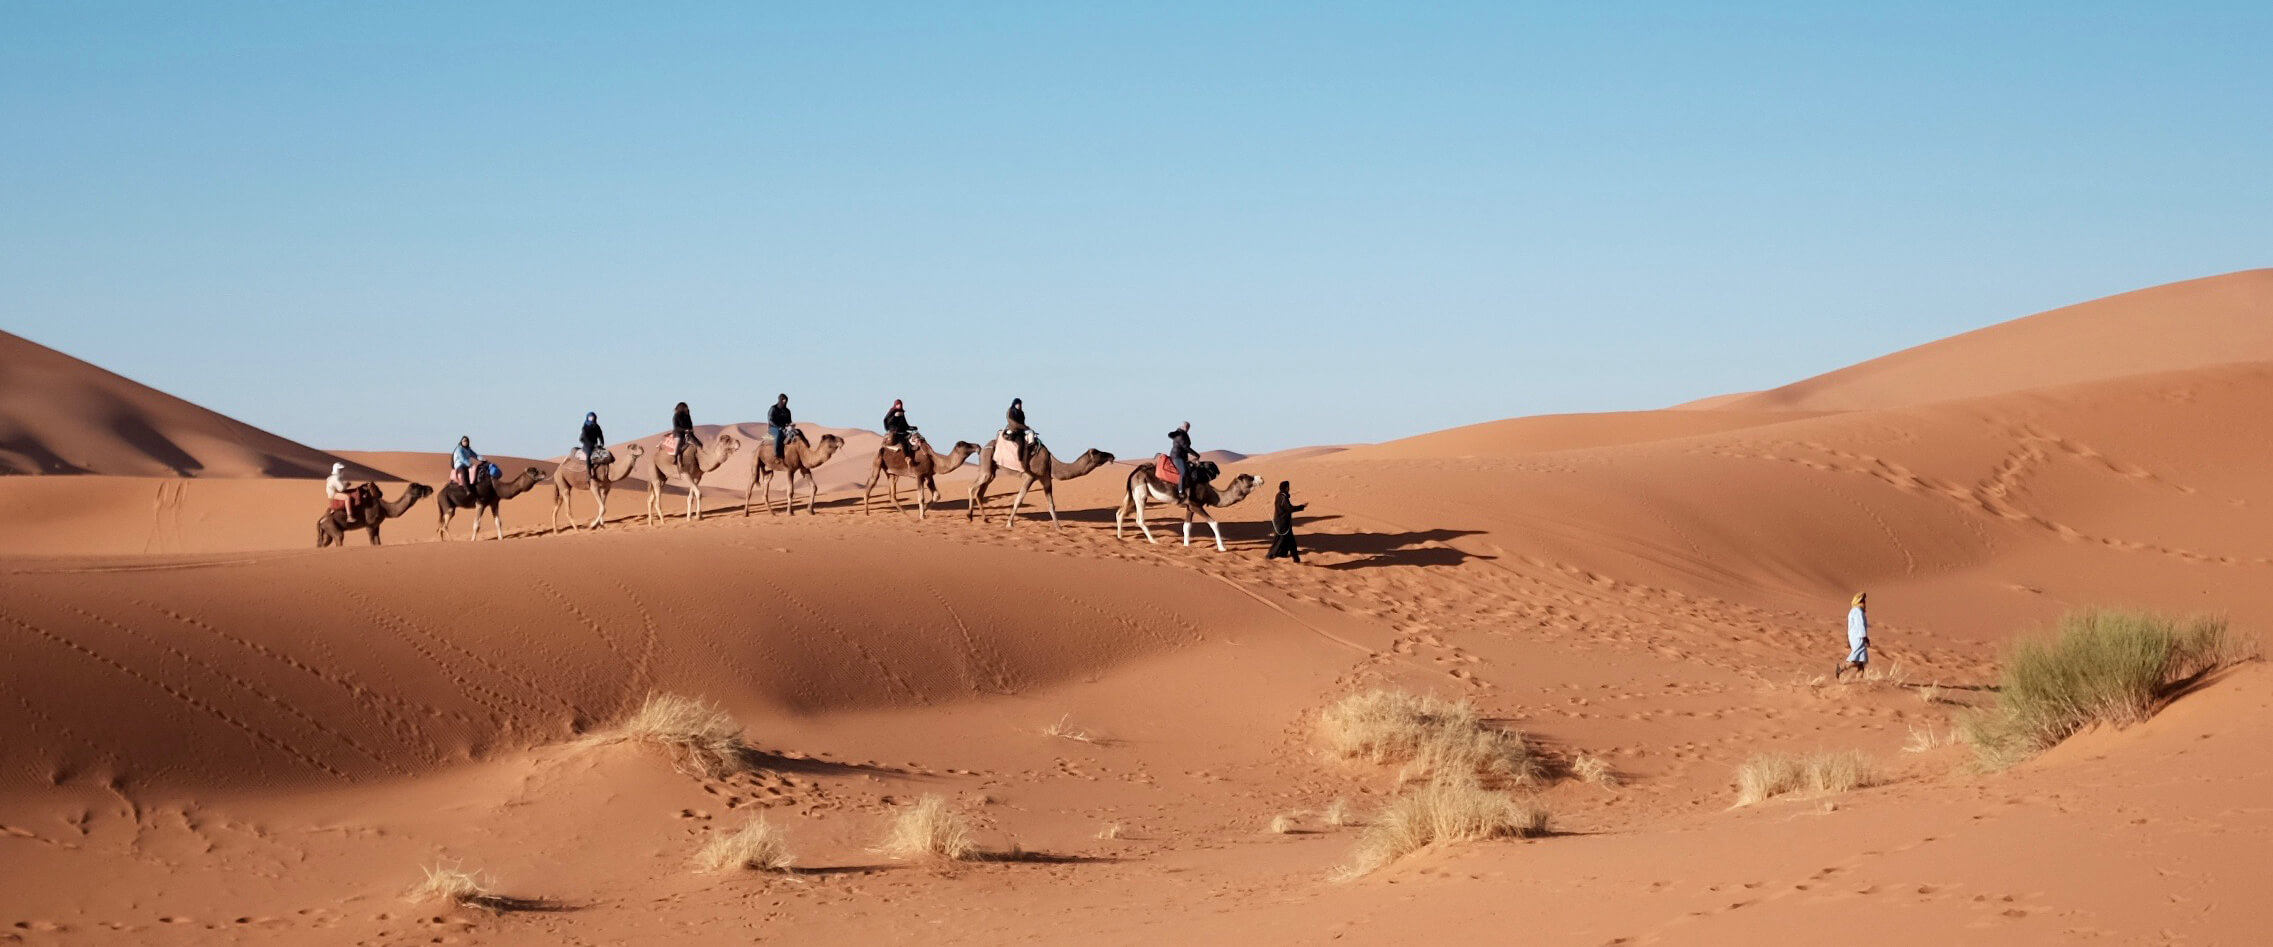 Arabs riding camels through the desert